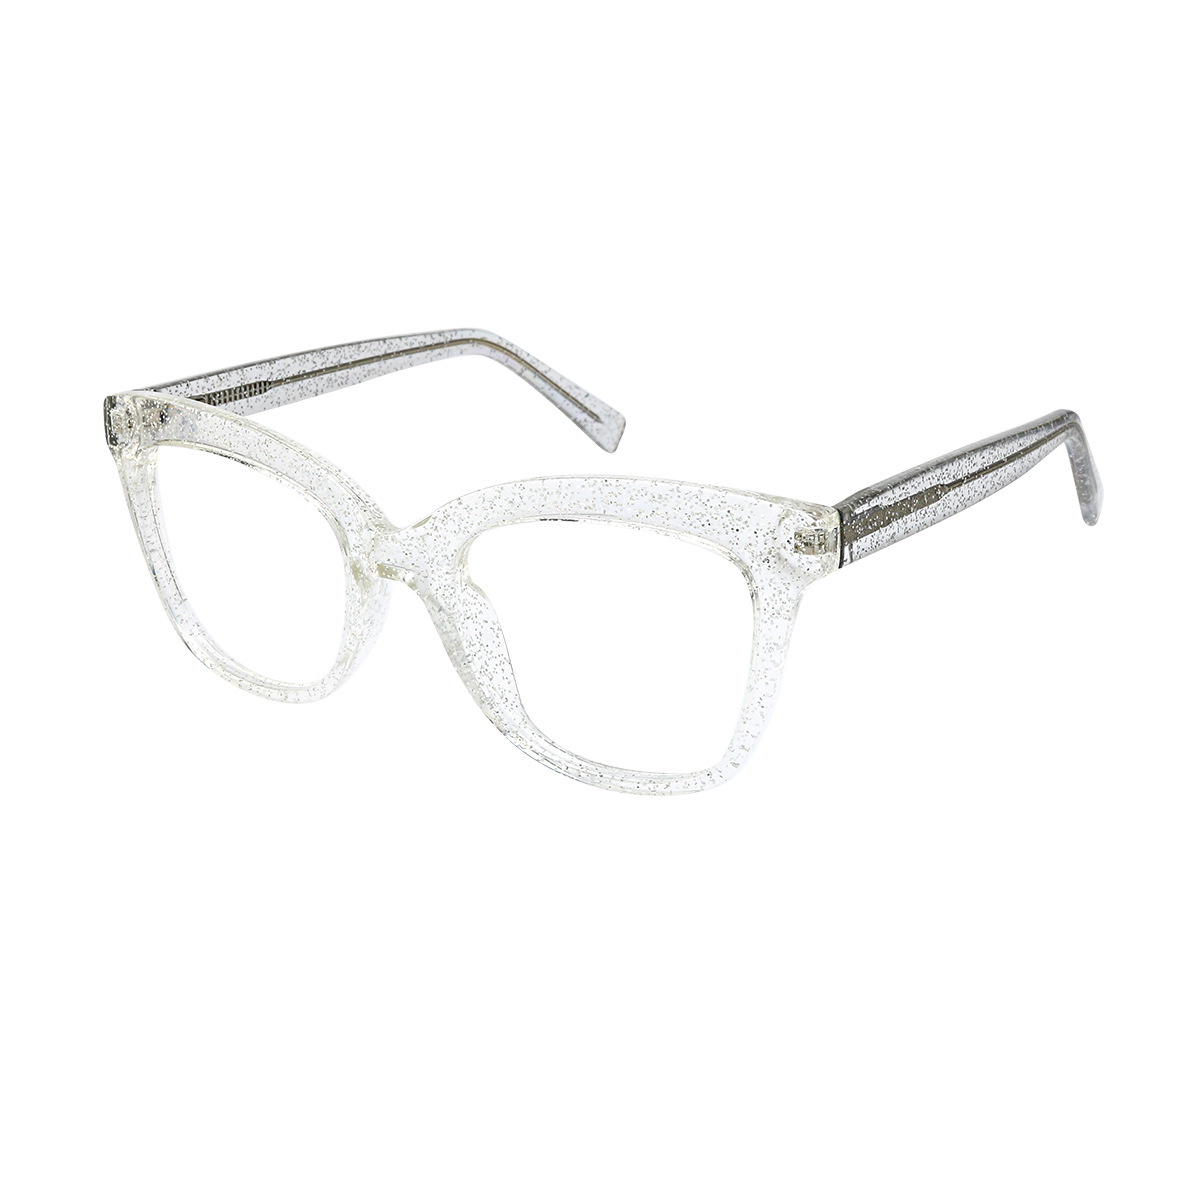 Vanessa - Square Transparent/Sparkle Reading Glasses for Women